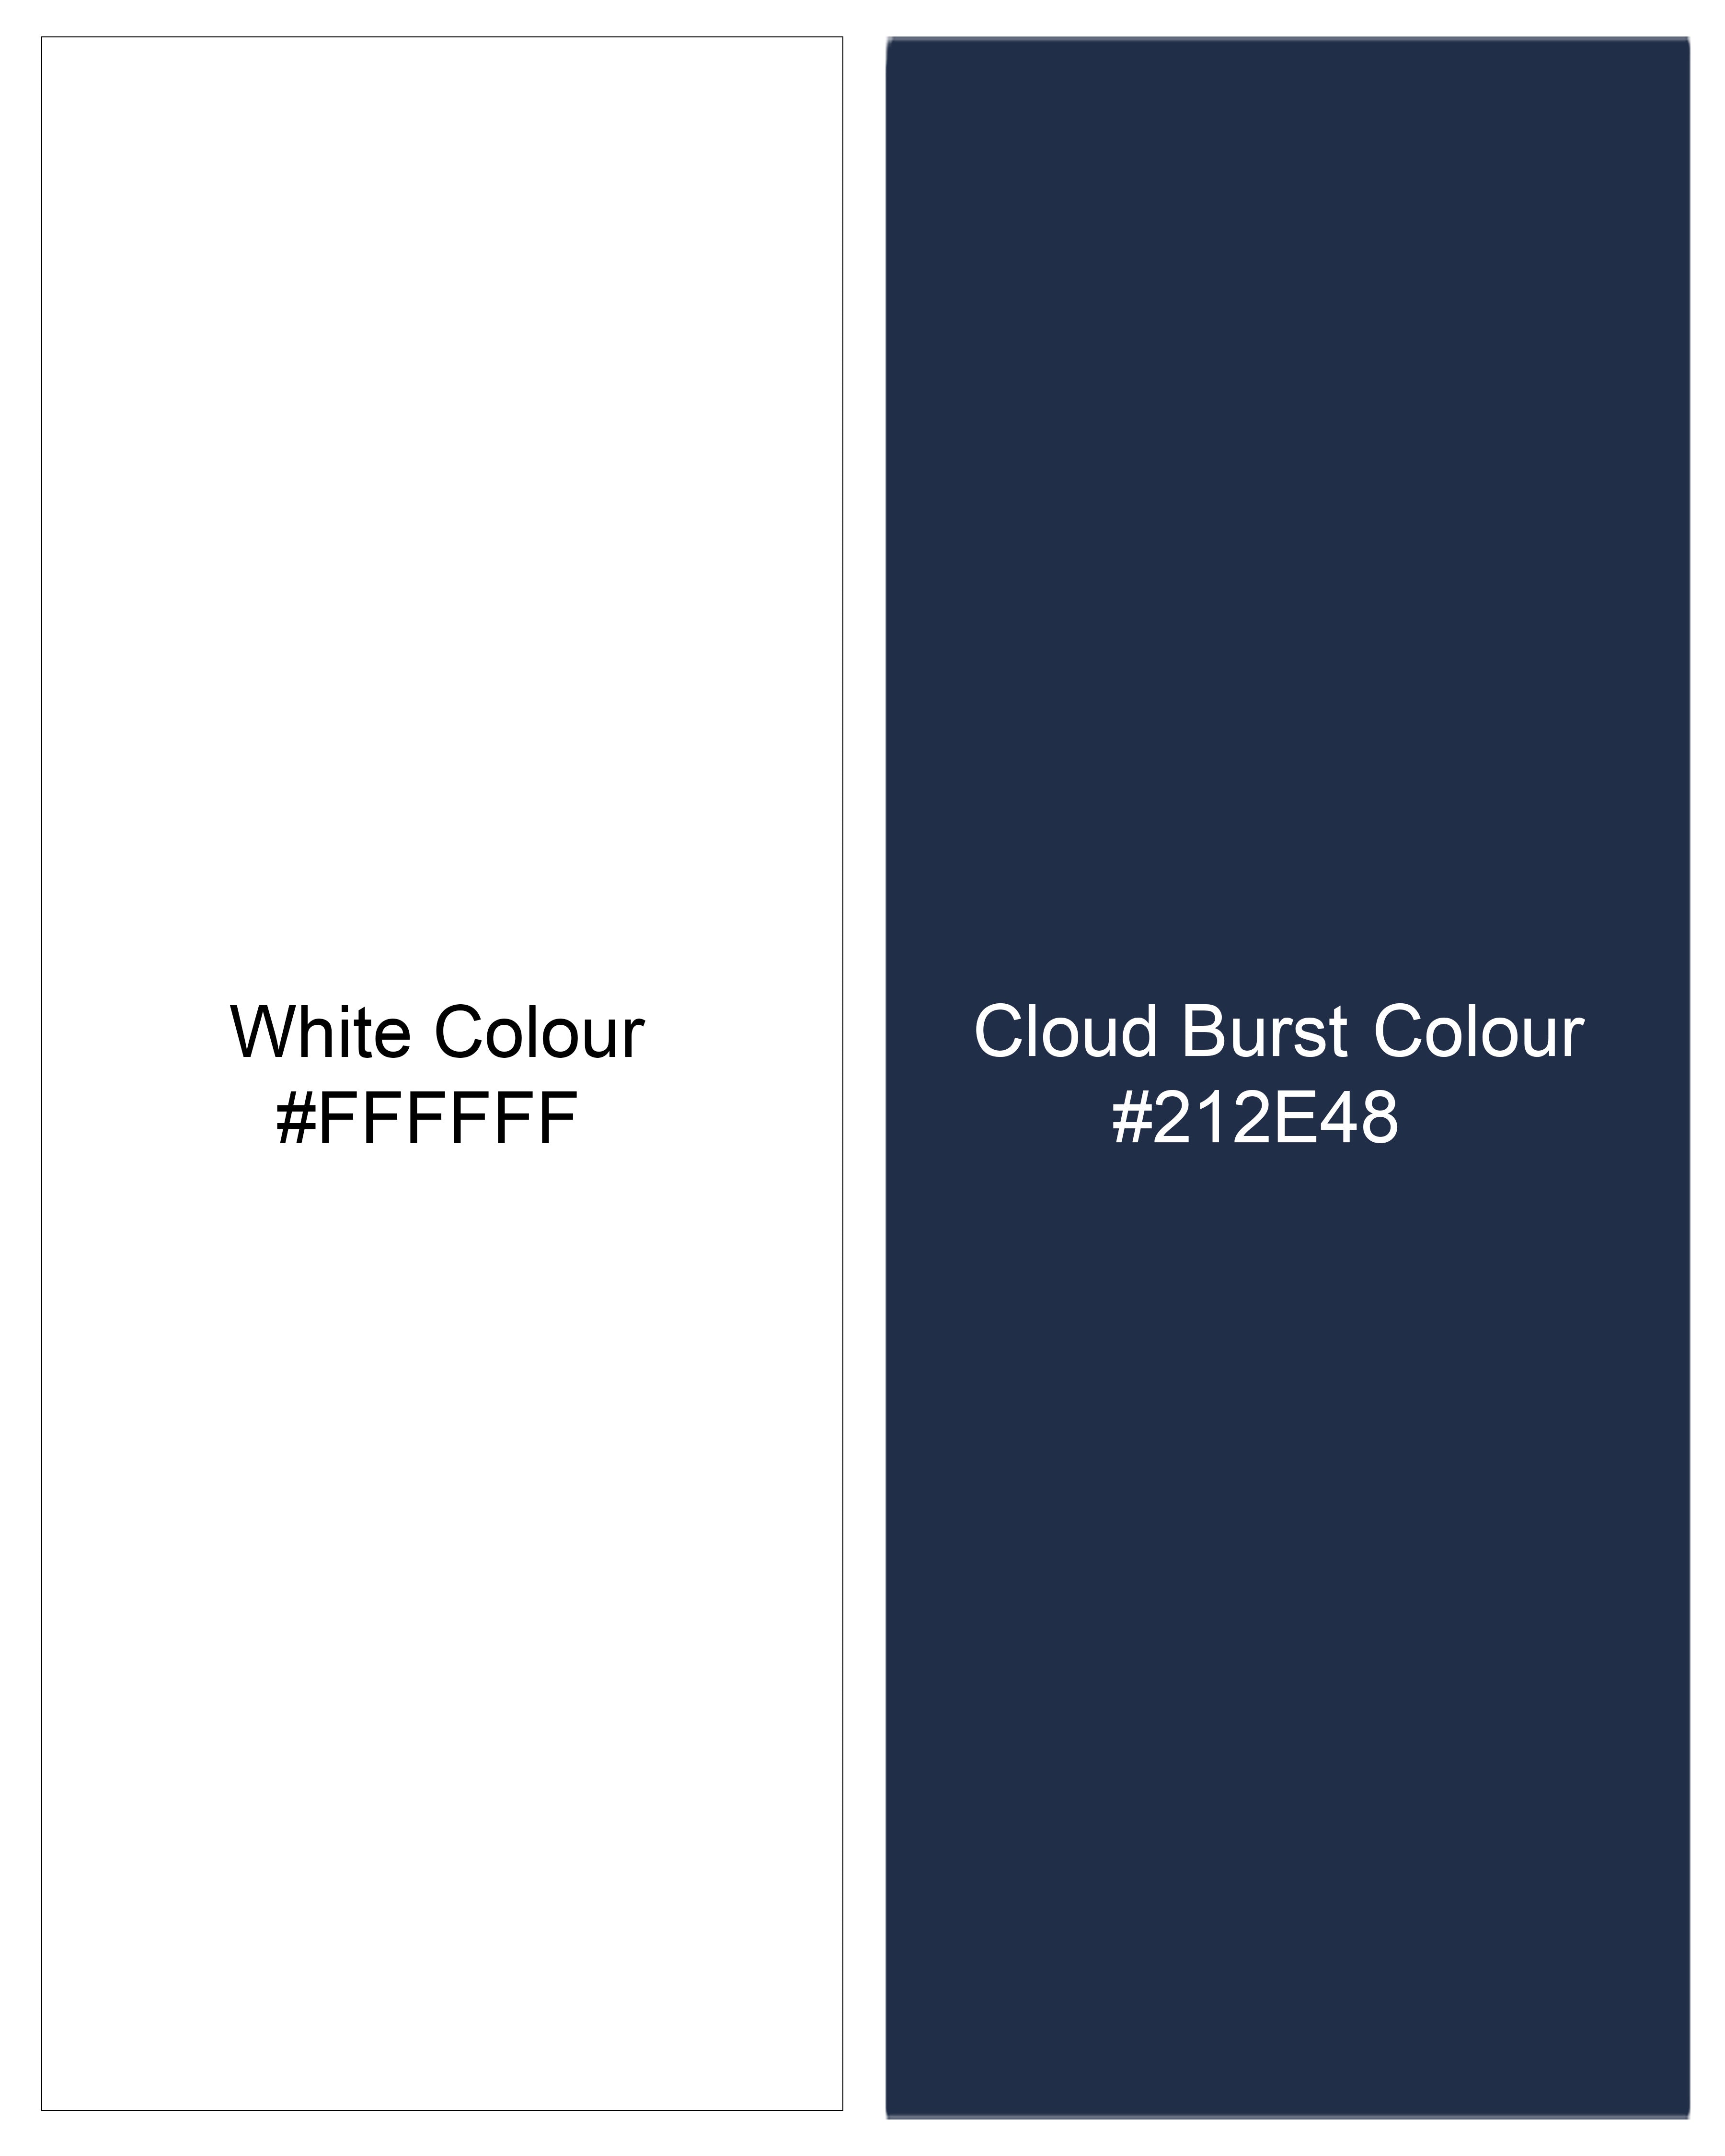 Bright White with CloudBurst Blue Paisley Printed Premium Cotton Shirt  8605-BLE-38,8605-BLE-H-38,8605-BLE-39,8605-BLE-H-39,8605-BLE-40,8605-BLE-H-40,8605-BLE-42,8605-BLE-H-42,8605-BLE-44,8605-BLE-H-44,8605-BLE-46,8605-BLE-H-46,8605-BLE-48,8605-BLE-H-48,8605-BLE-50,8605-BLE-H-50,8605-BLE-52,8605-BLE-H-52